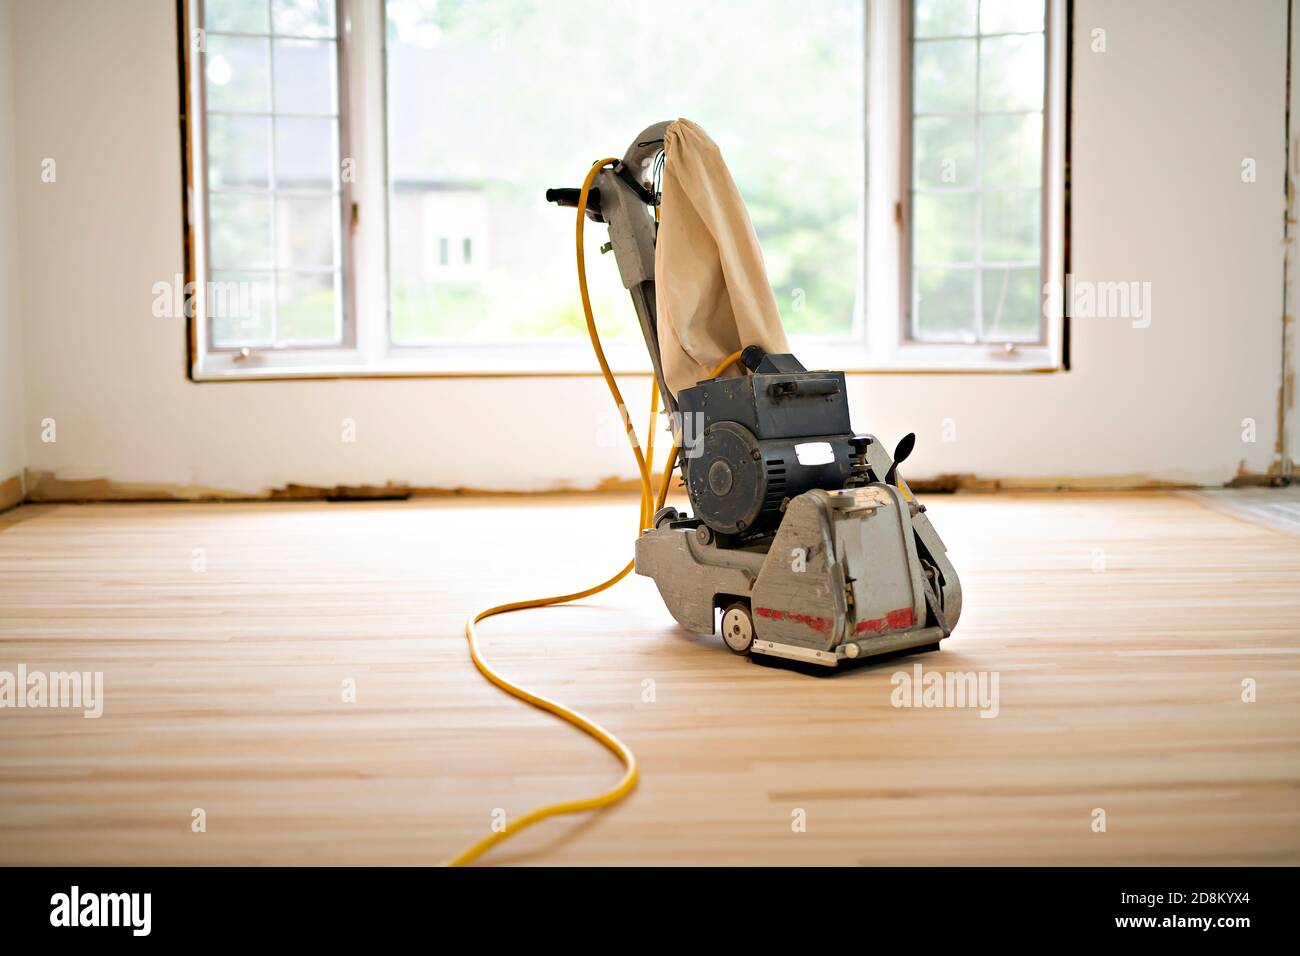 Sanding hardwood floor with the grinding machine only tool Stock Photo